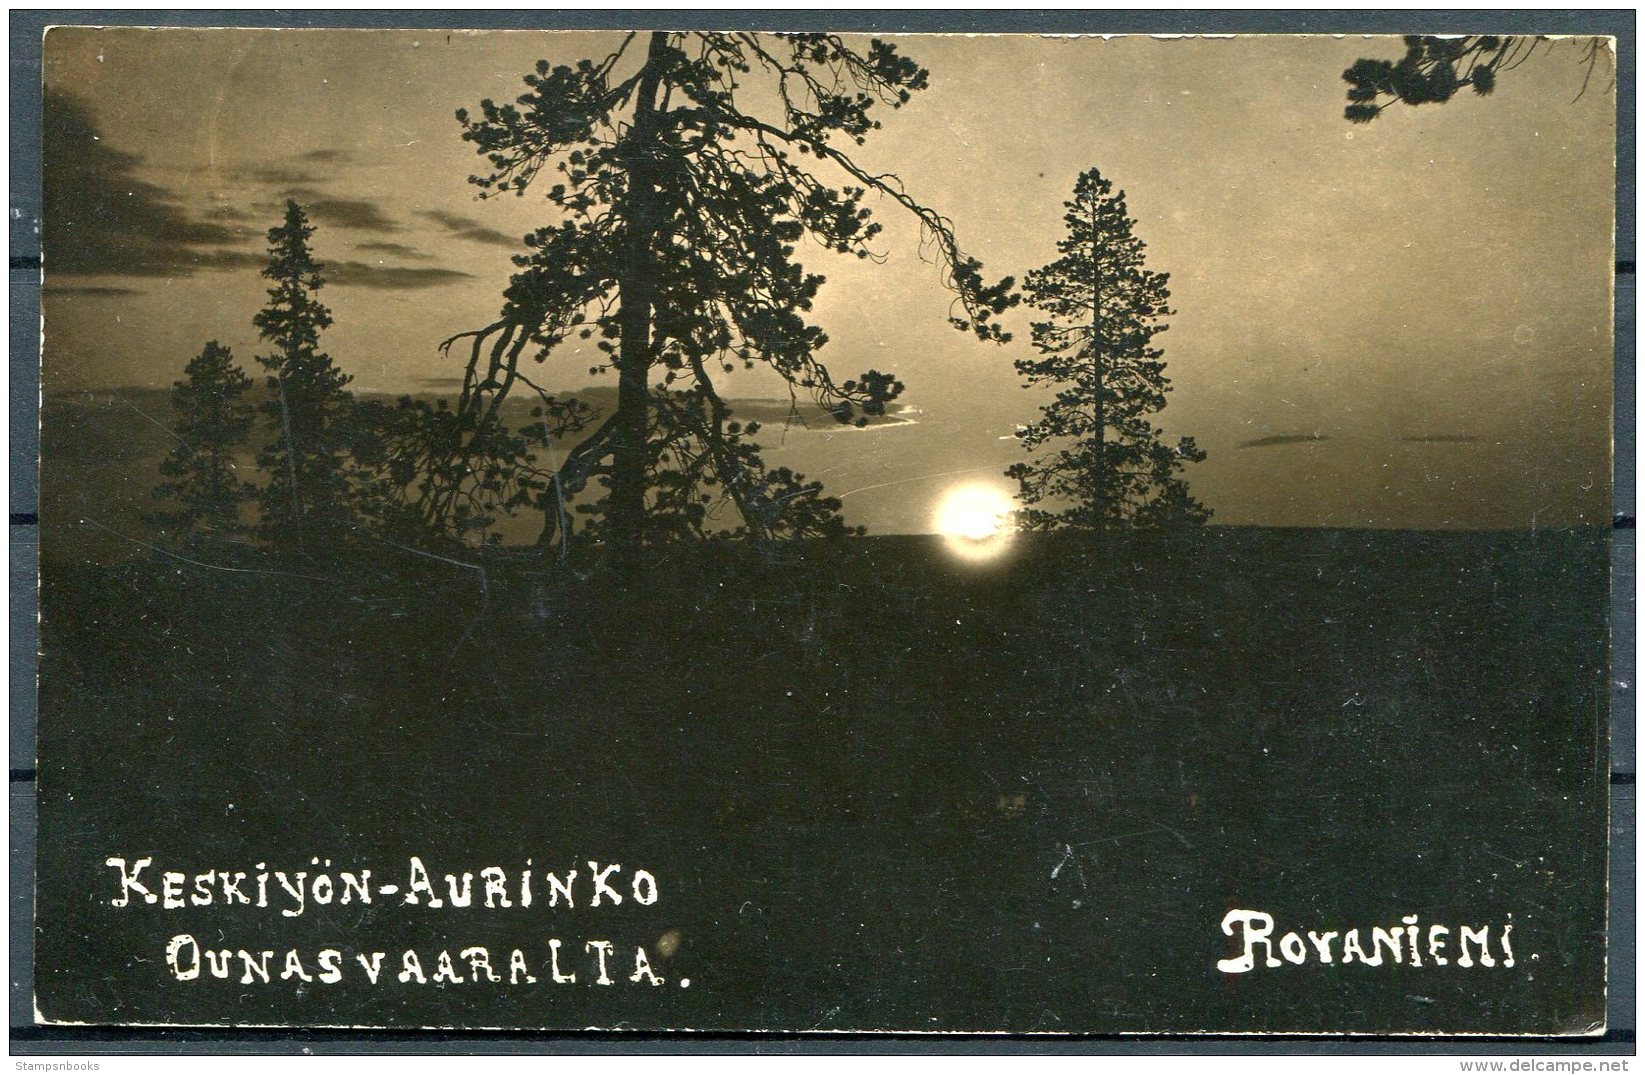 Finland Rovaniemi Rising Sun Postcard. Keskiyon Aurinko Ounasvaaralta - Germany - Covers & Documents